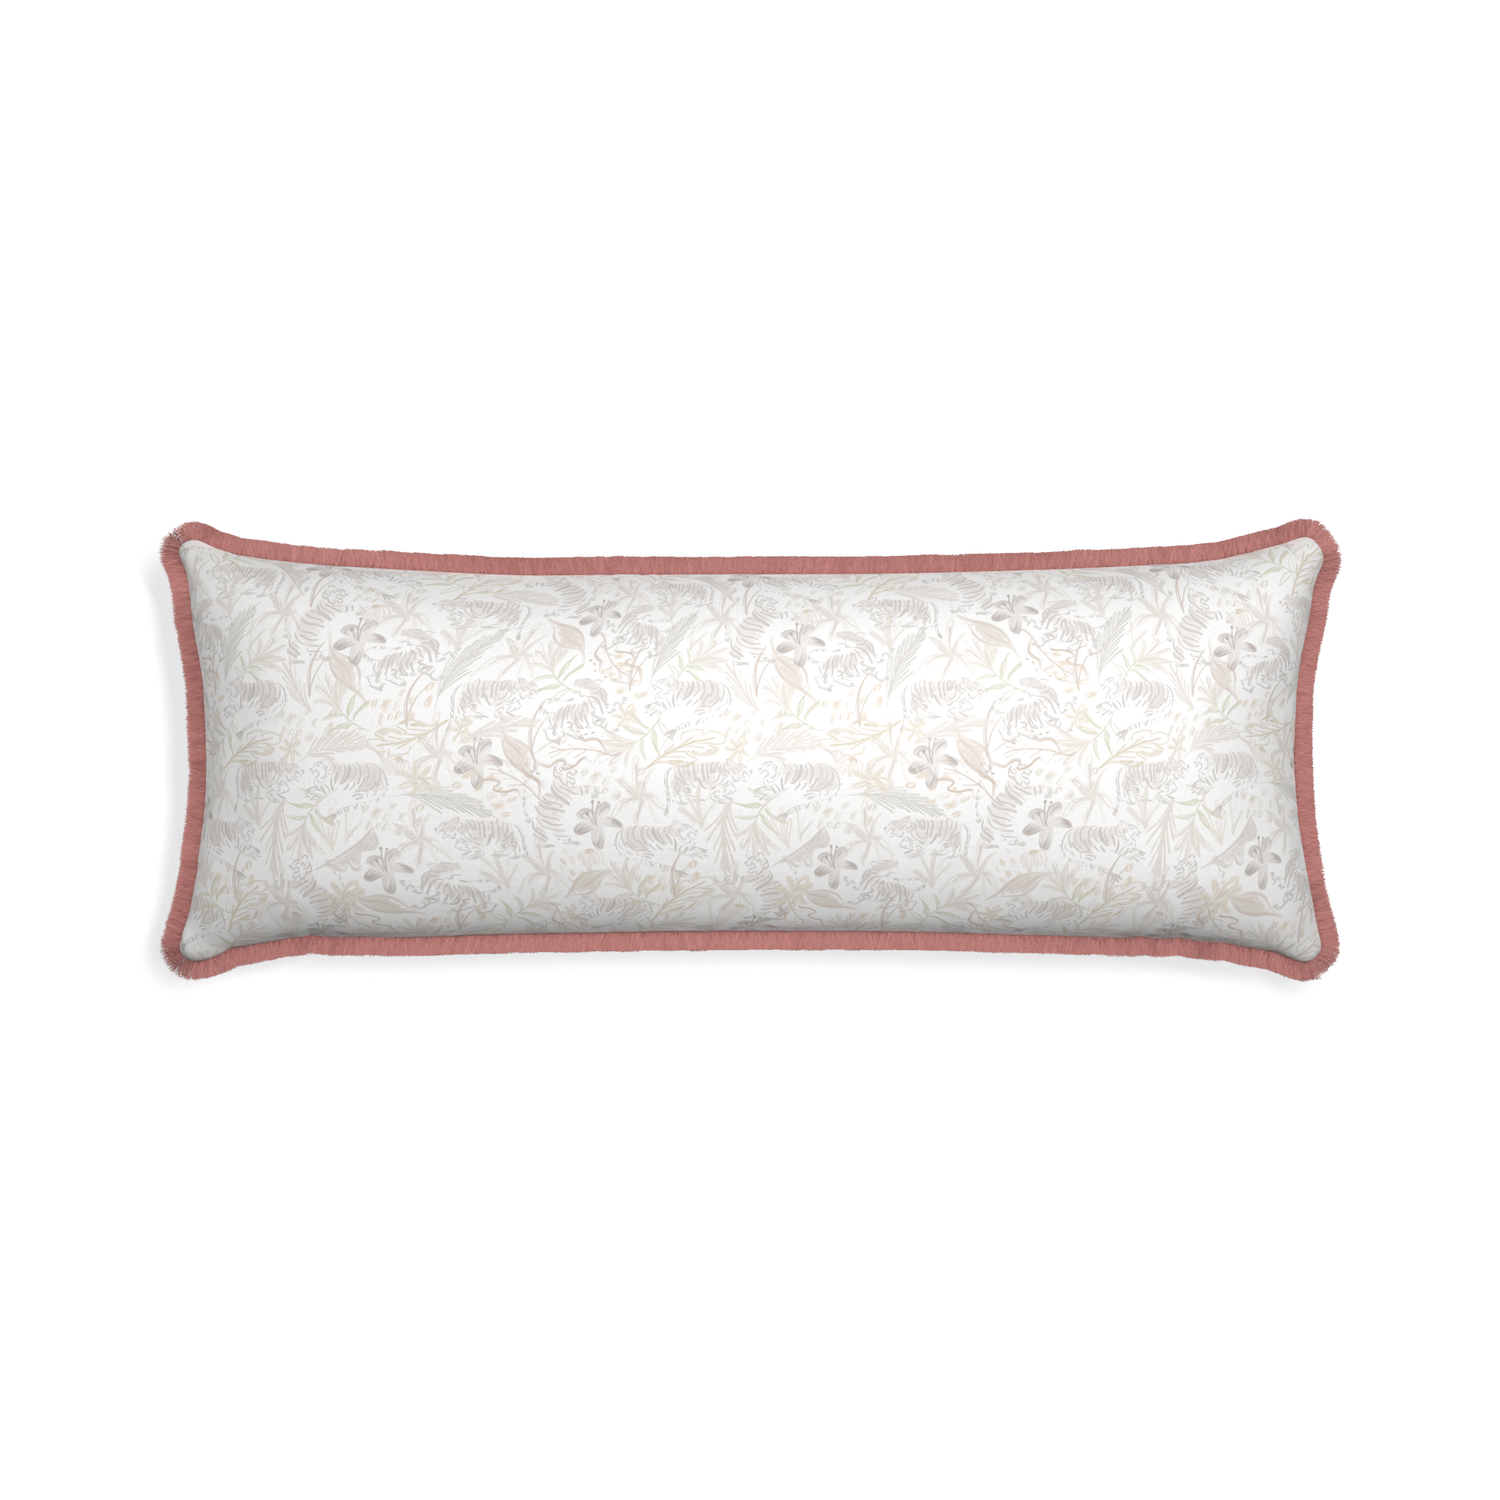 Xl-lumbar frida sand custom pillow with d fringe on white background